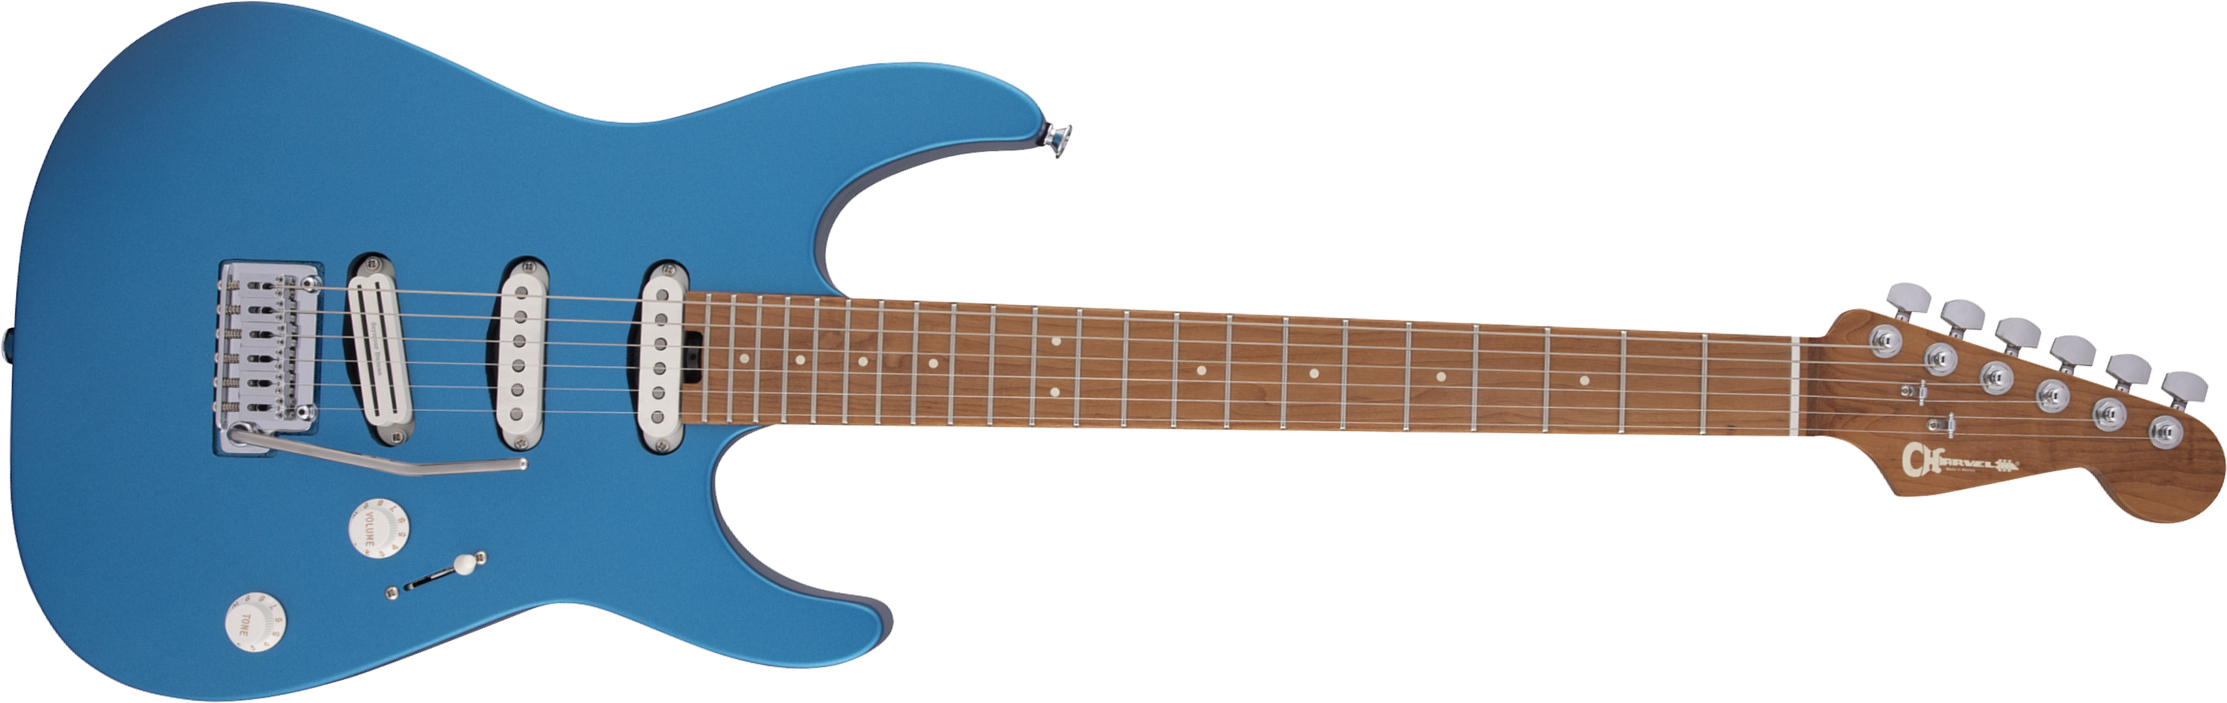 Charvel Dinky Dk22 Sss 2pt Cm Pro-mod 3s Seymour Duncan Mn - Electric Blue - Metalen elektrische gitaar - Main picture